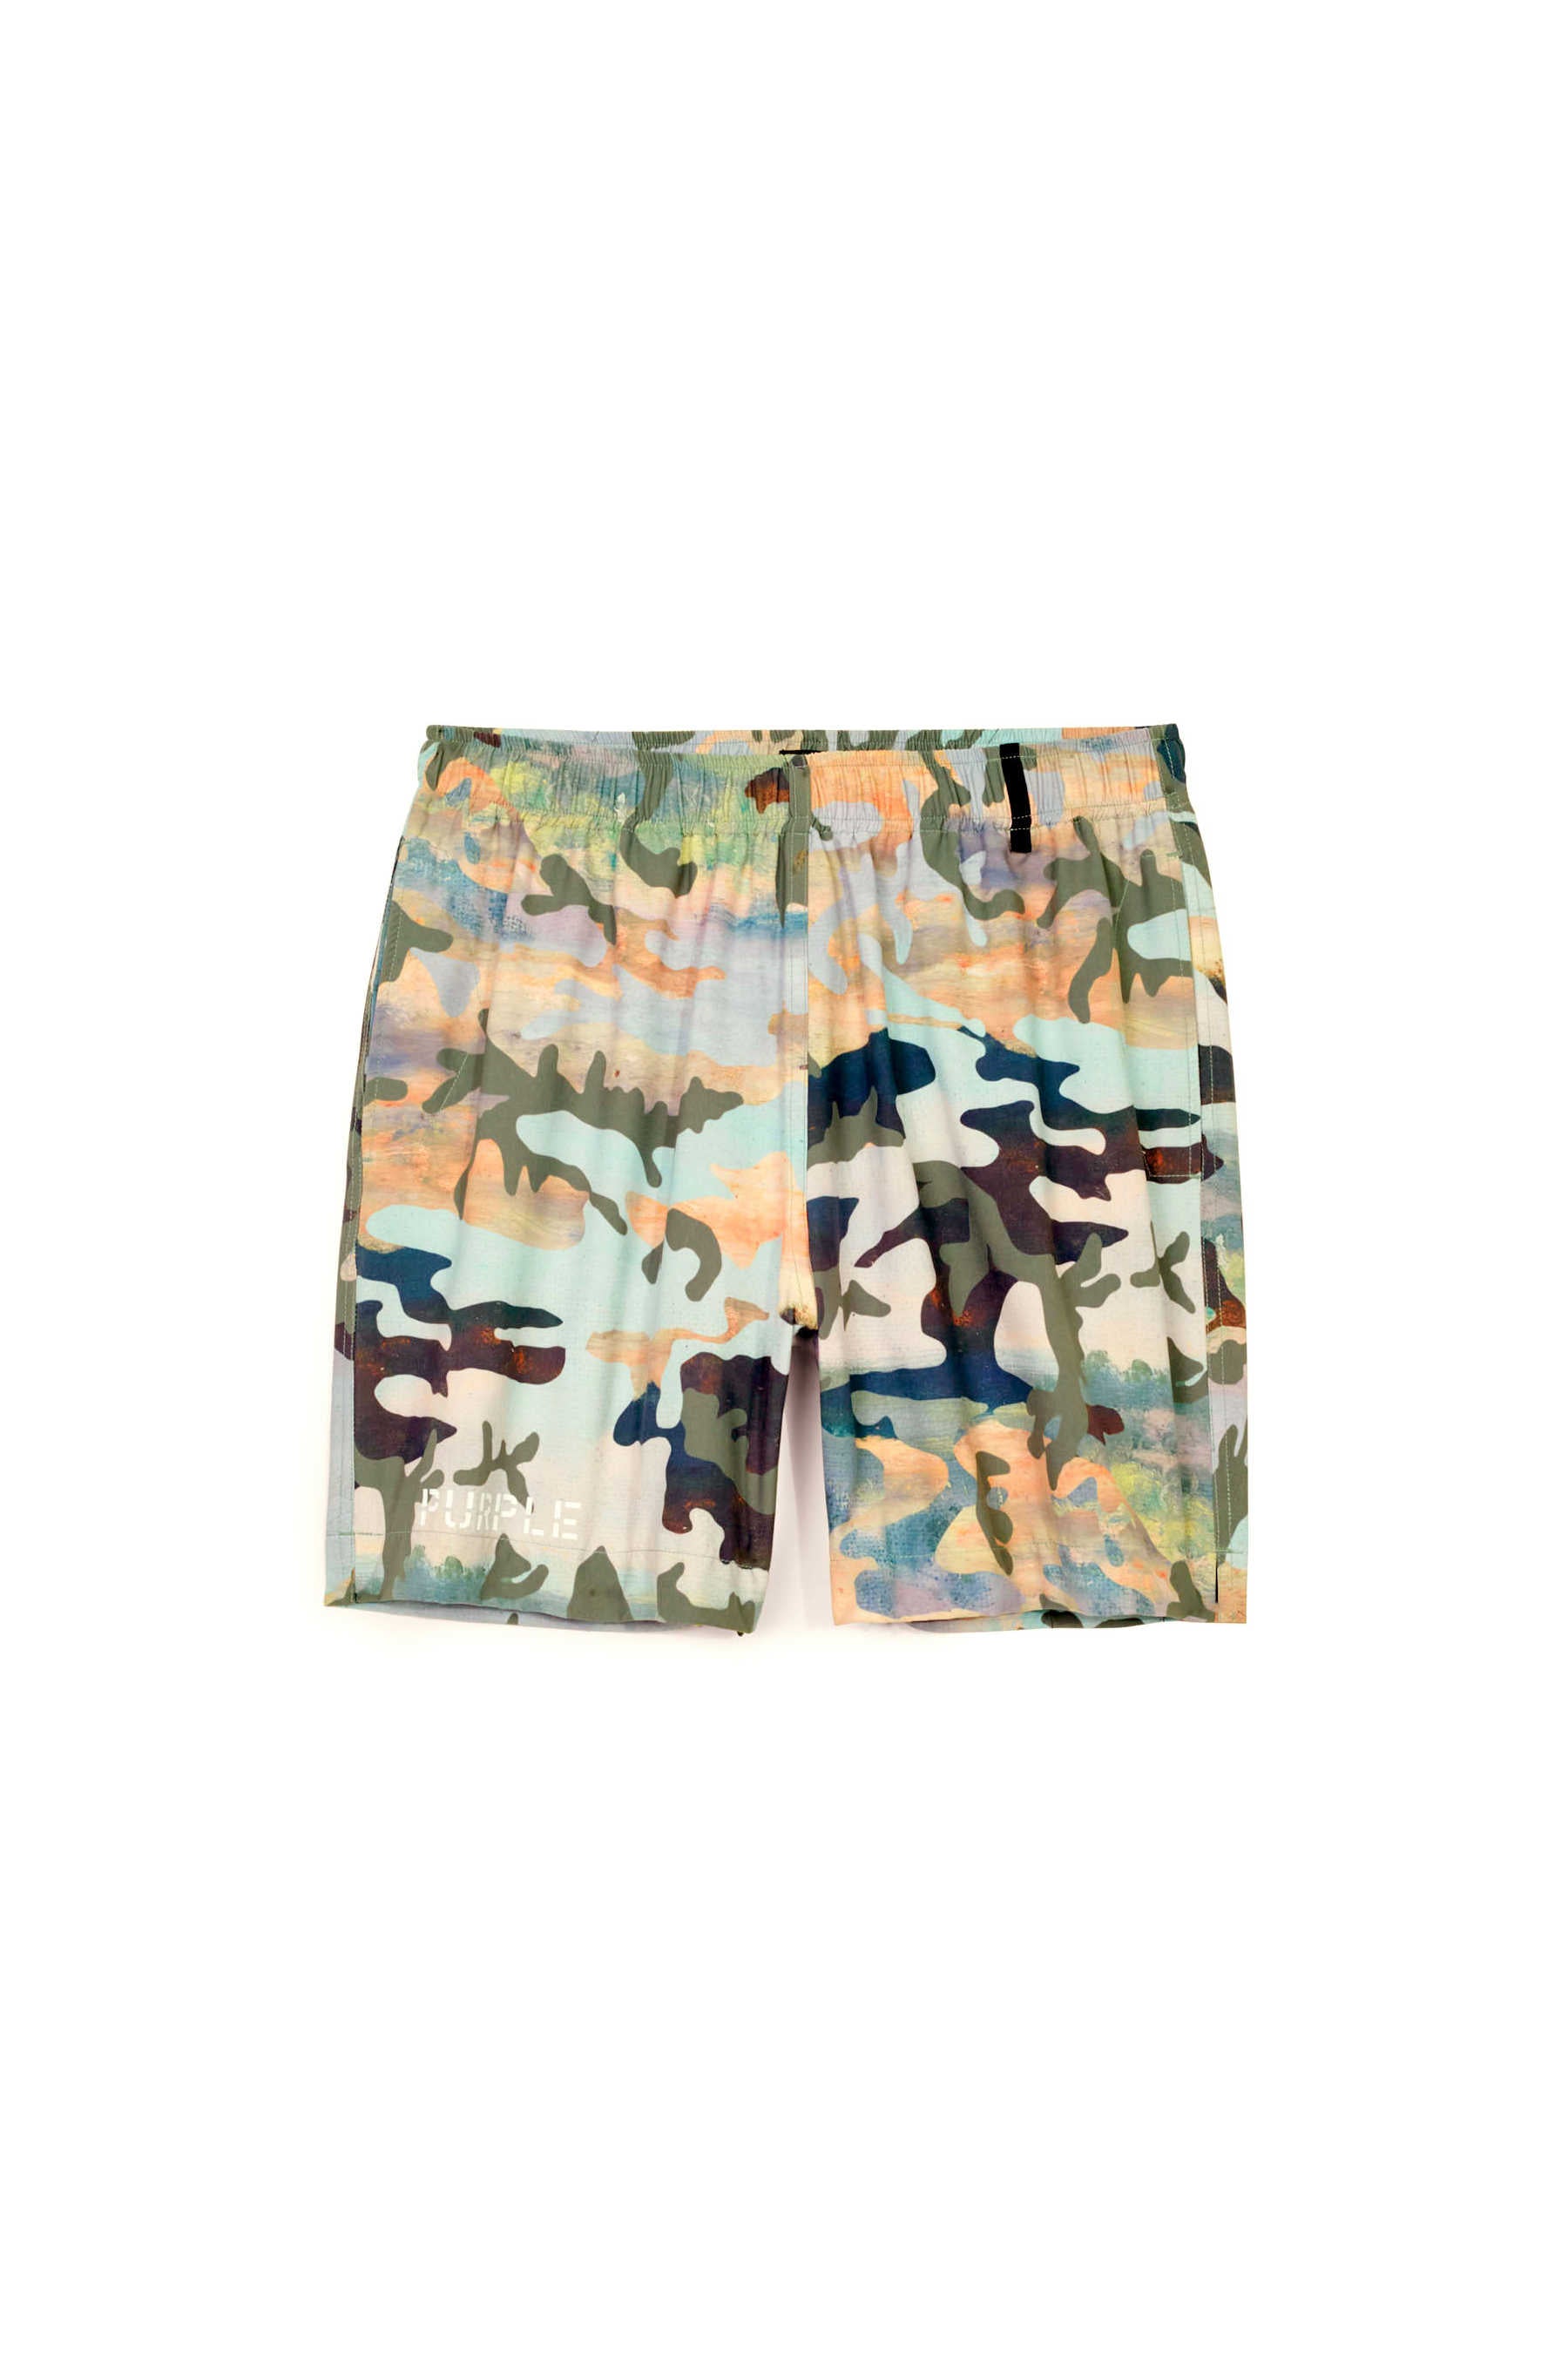 PURPLE BRAND - Men's Swim Short - Style No. P504 - Impressionist Camo Swim Shorts - Front